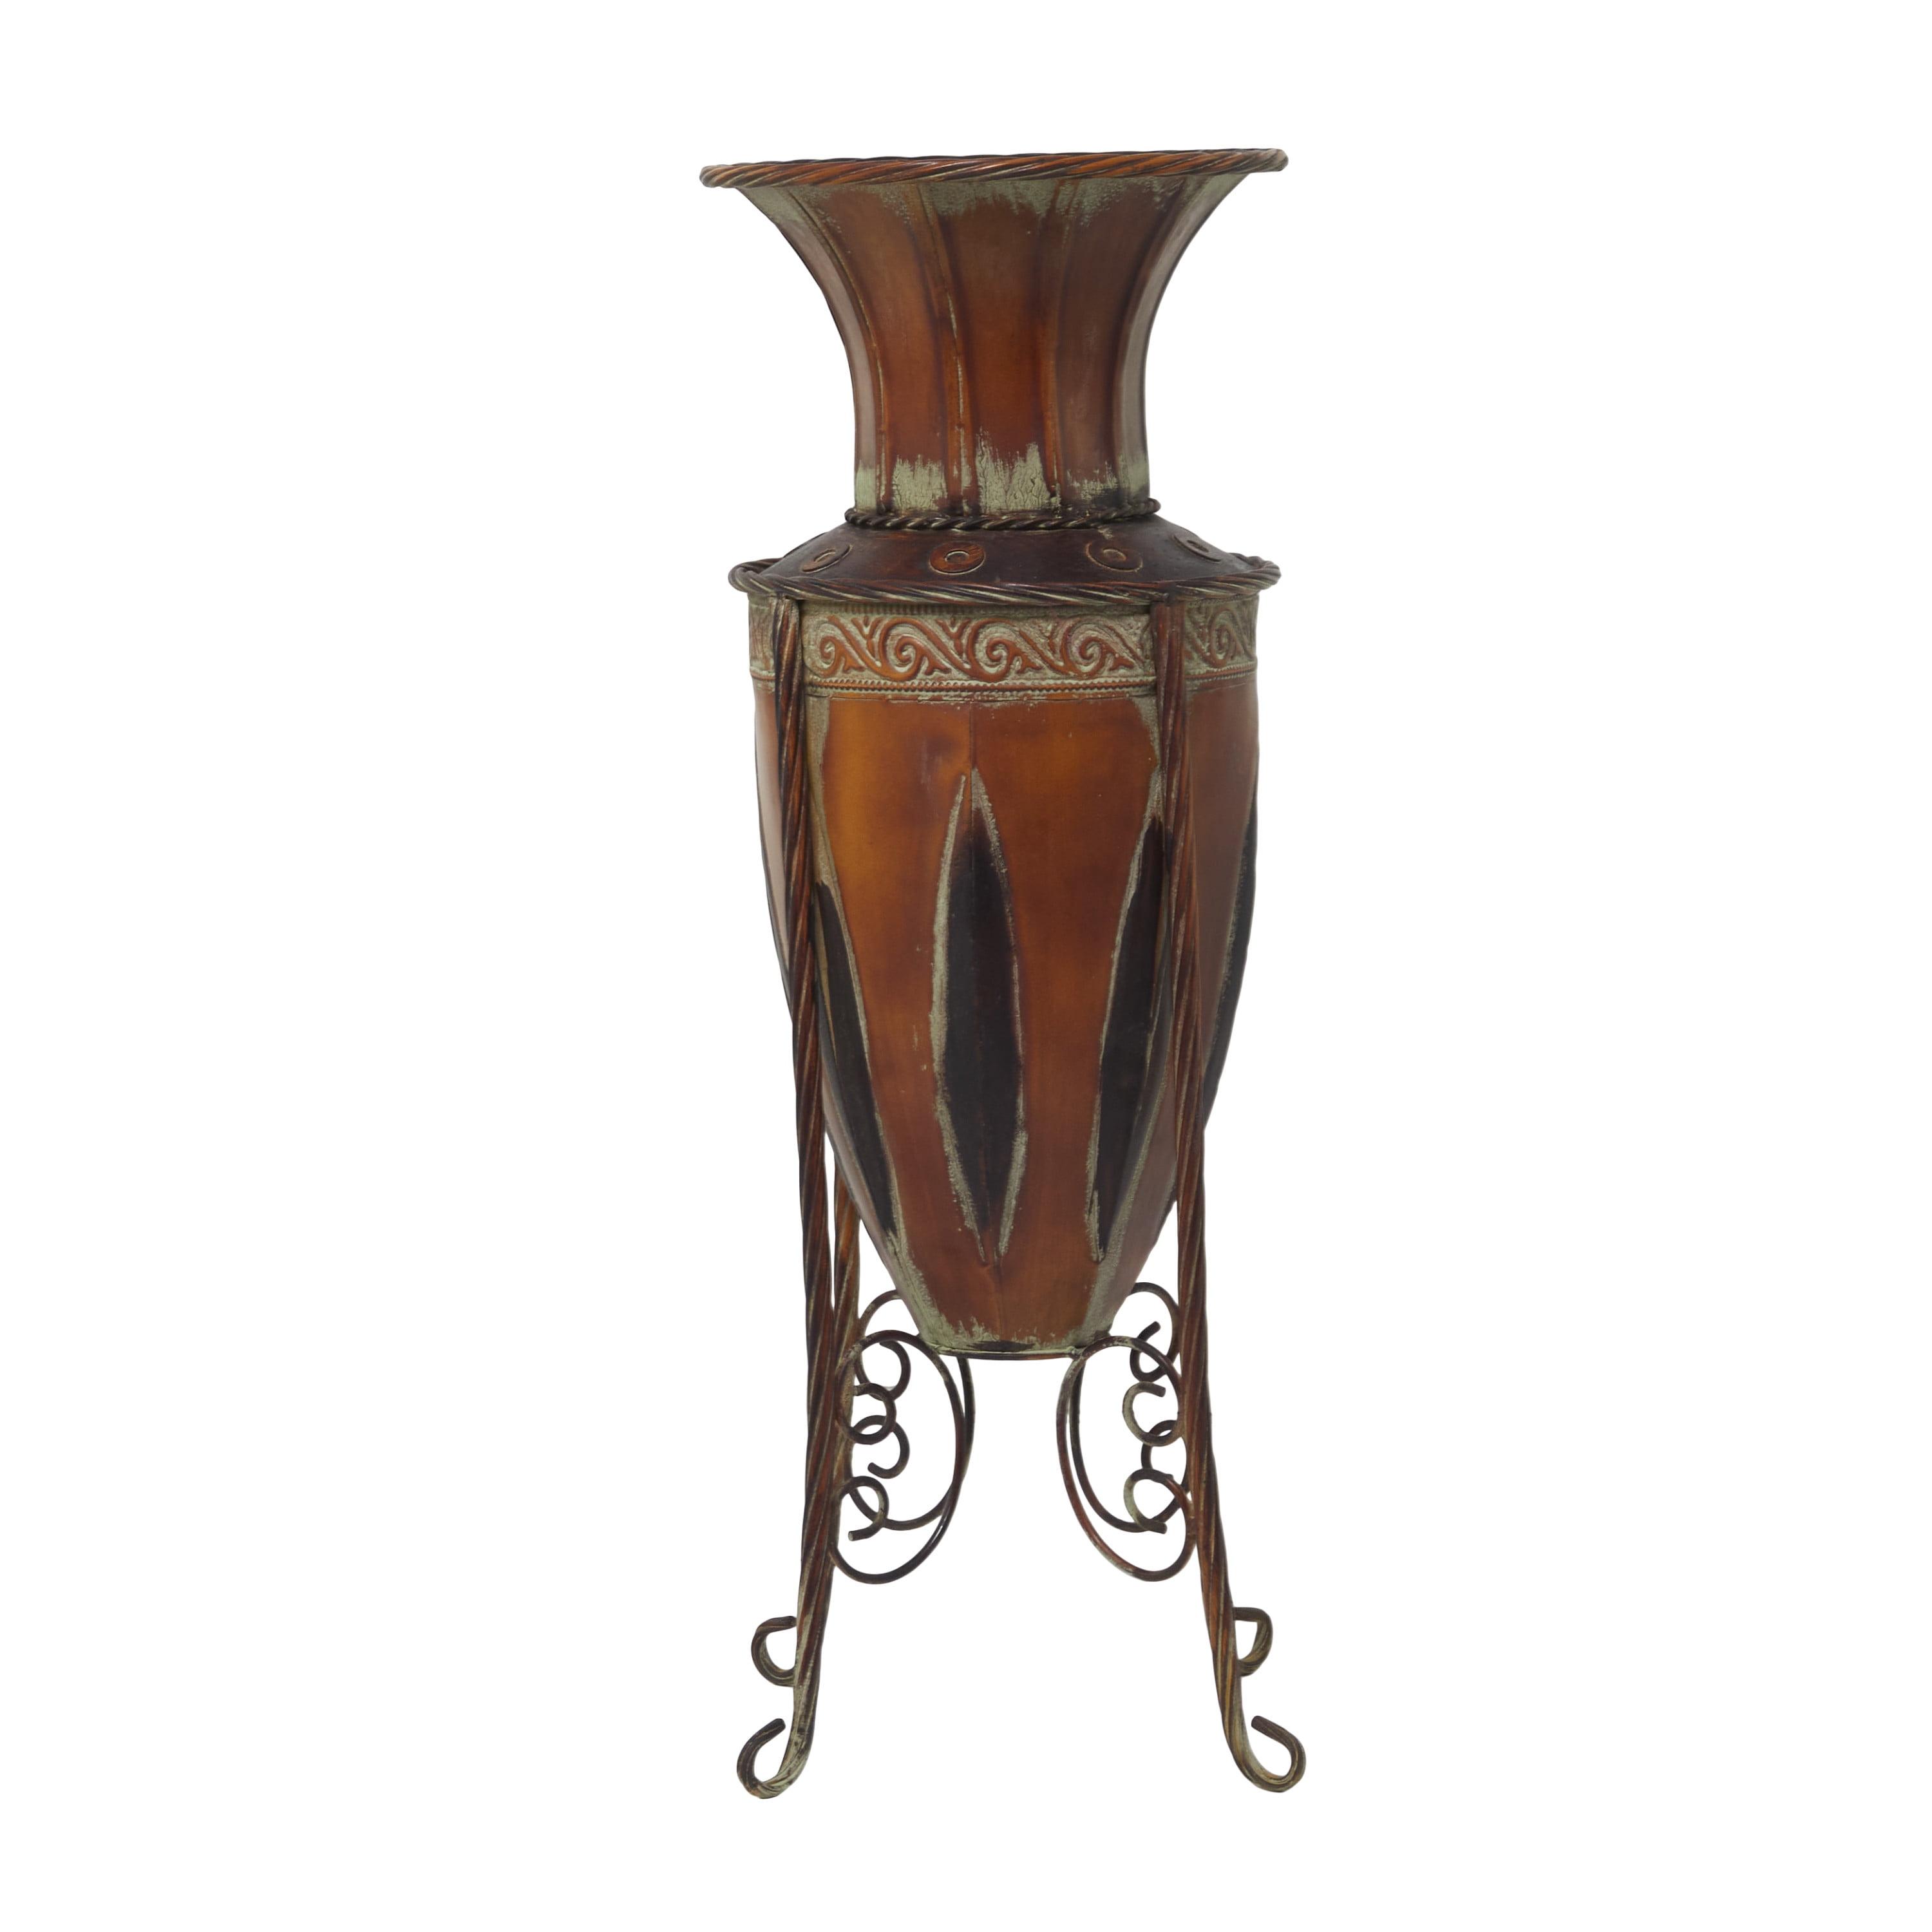 Rustic Weathered Brown Metal Amphora Floor Vase with Stand